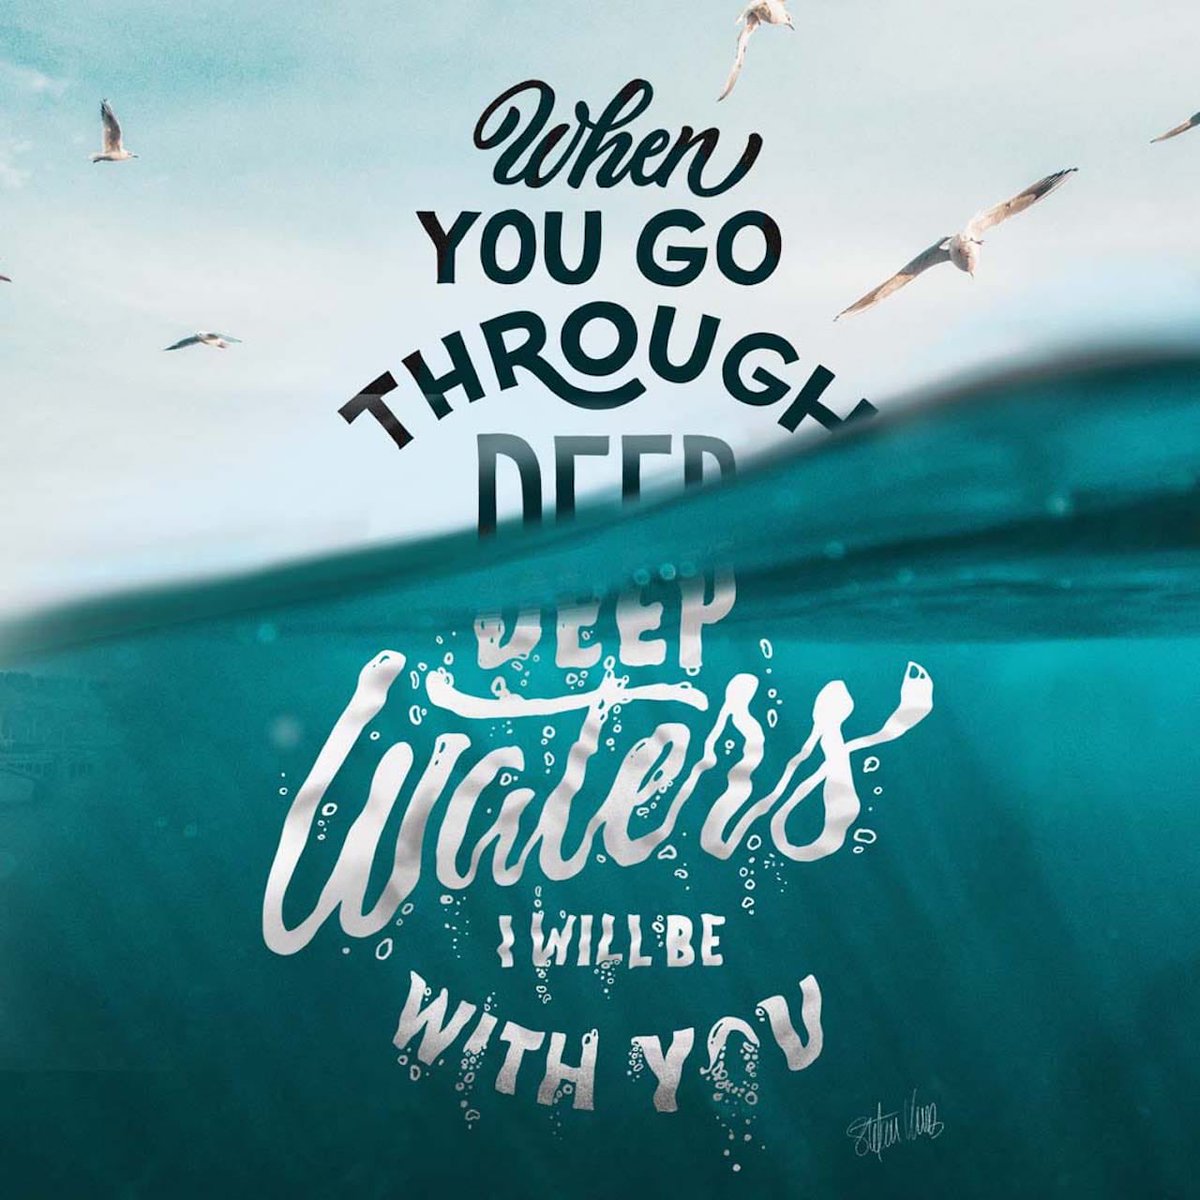 When you go through deep waters, God is with you. ❤ #godiswithyou #godneverfails #godlovesyou #godcares #stefankunz